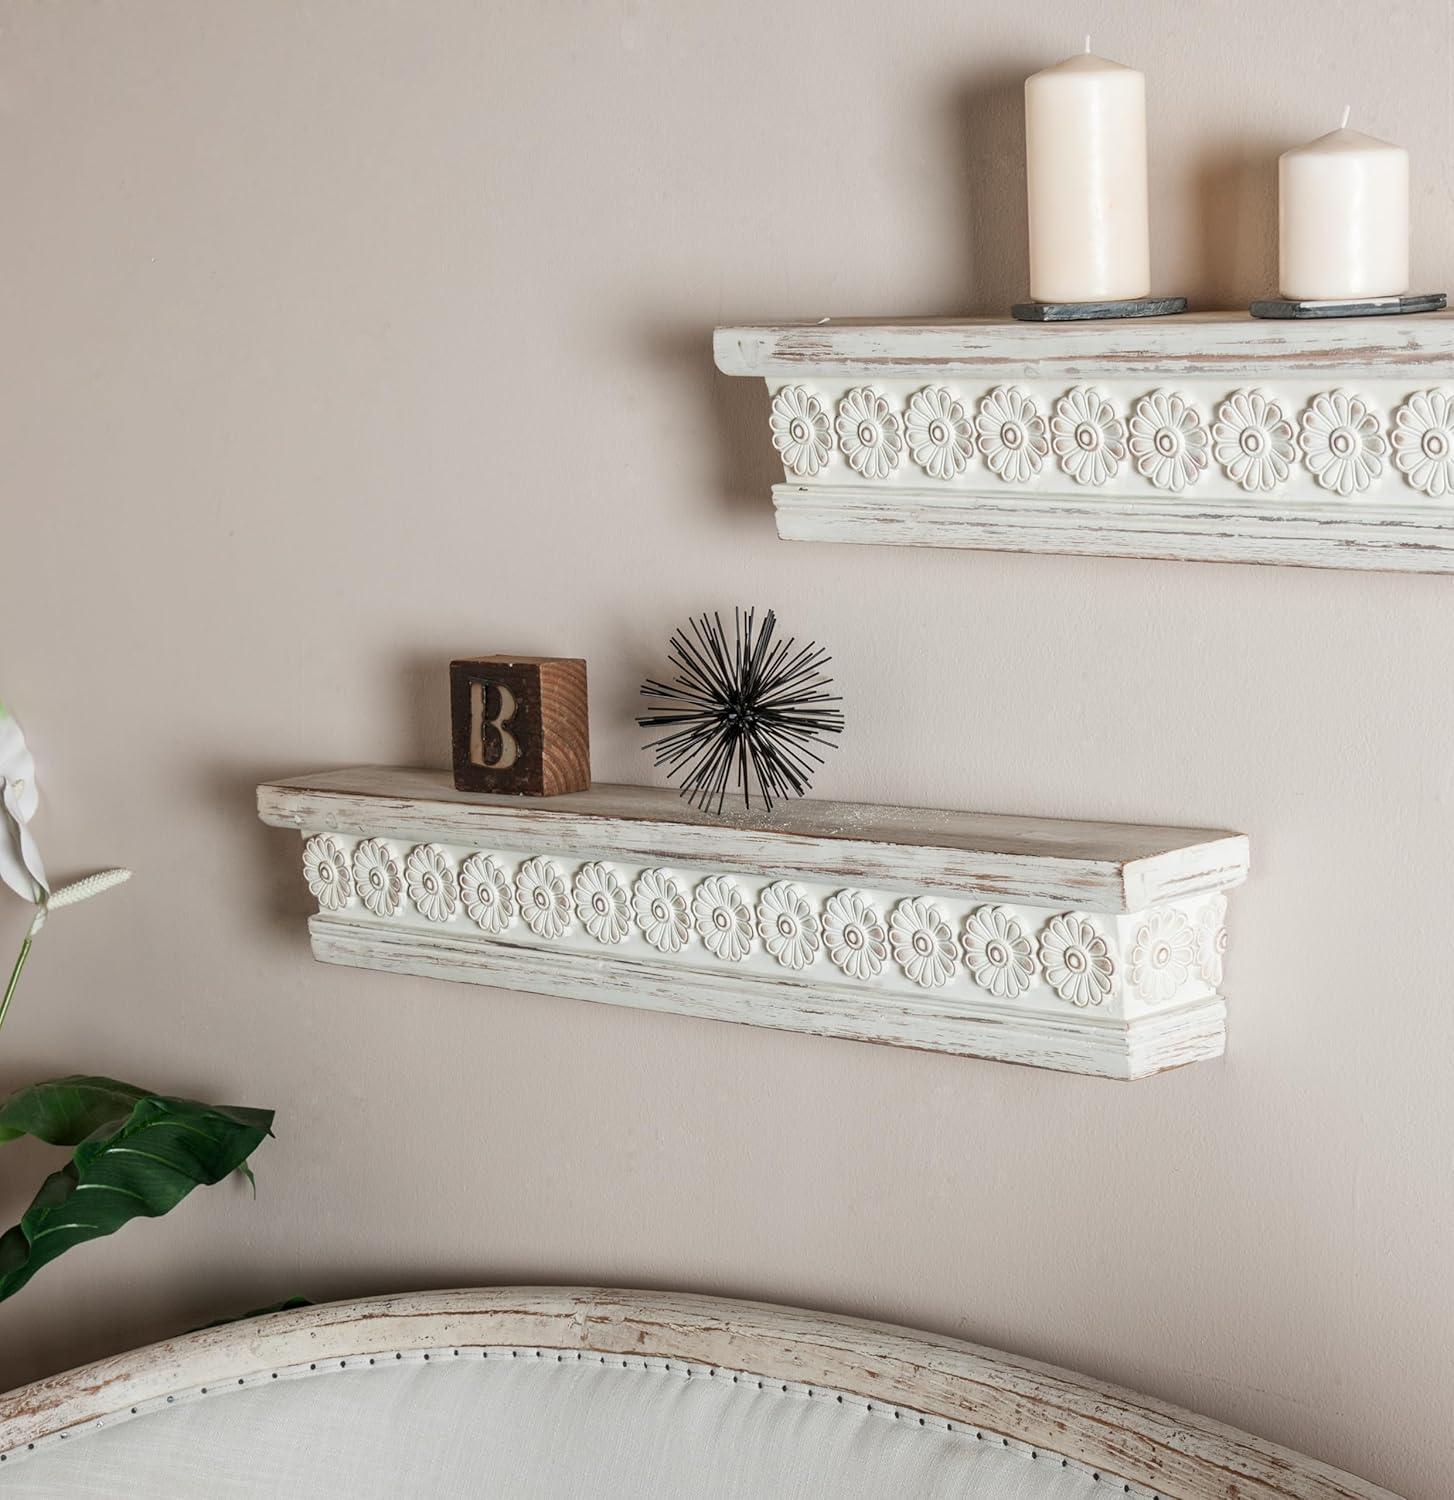 Elegant White Carved Floral 39" Wooden Wall Shelf